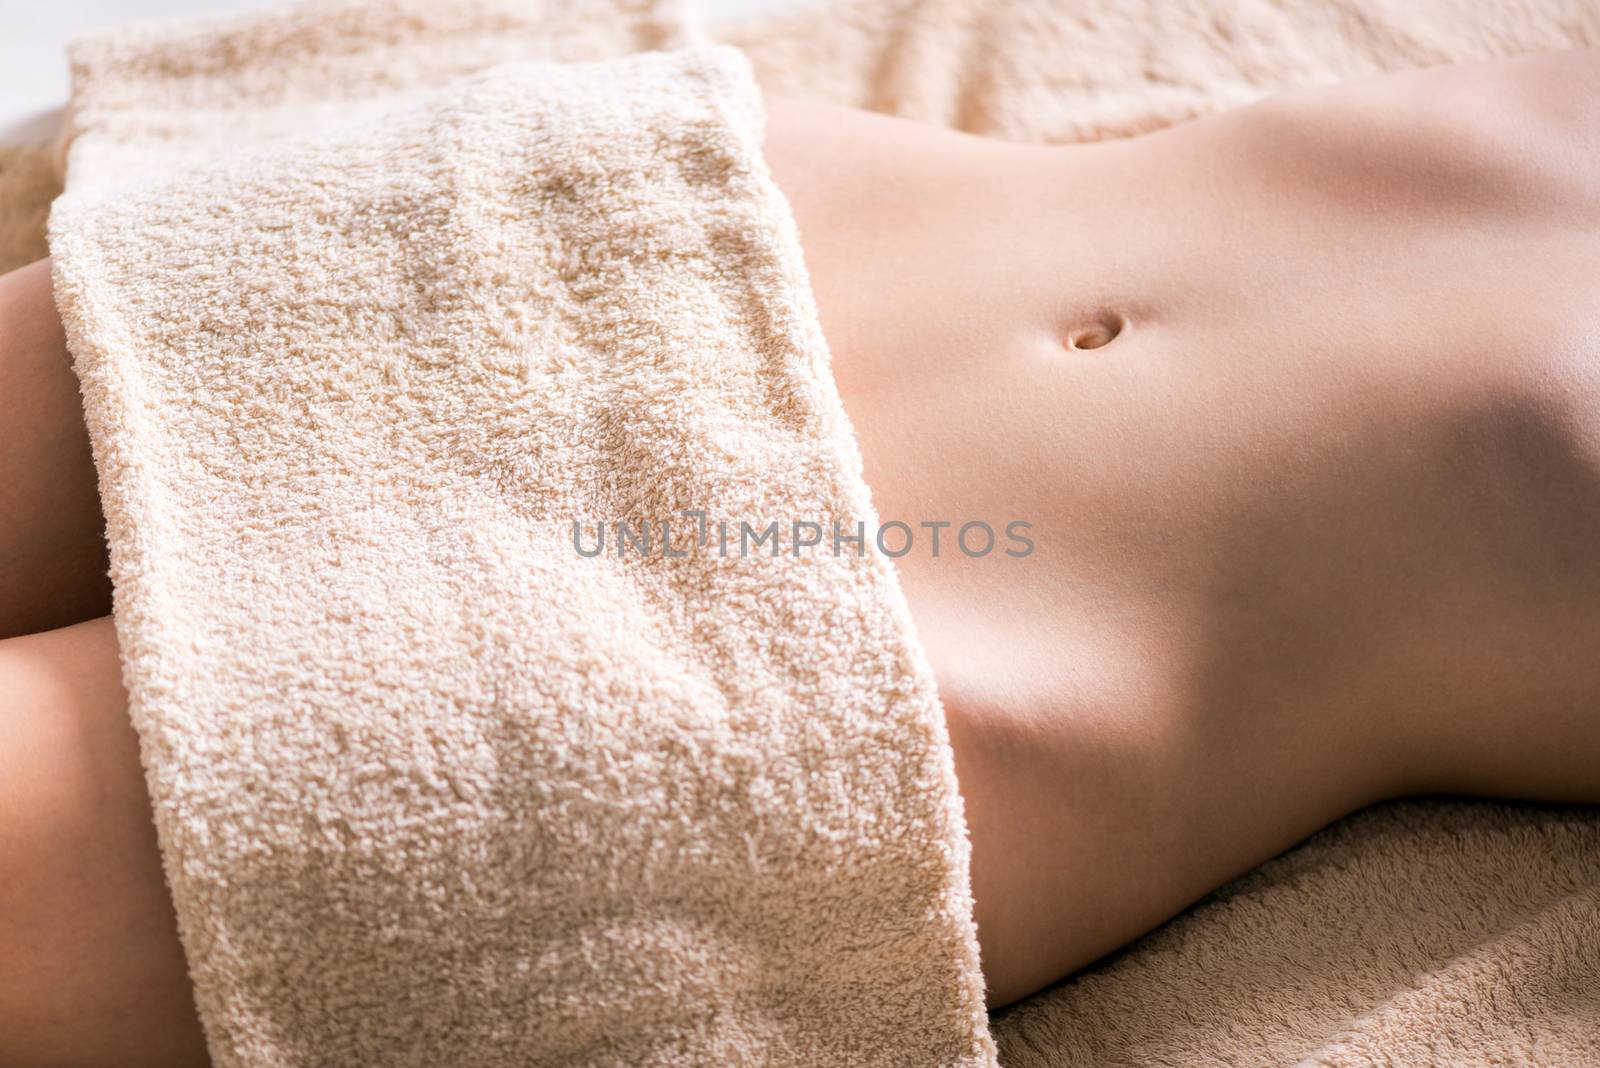 Slim Woman's Body by MilanMarkovic78